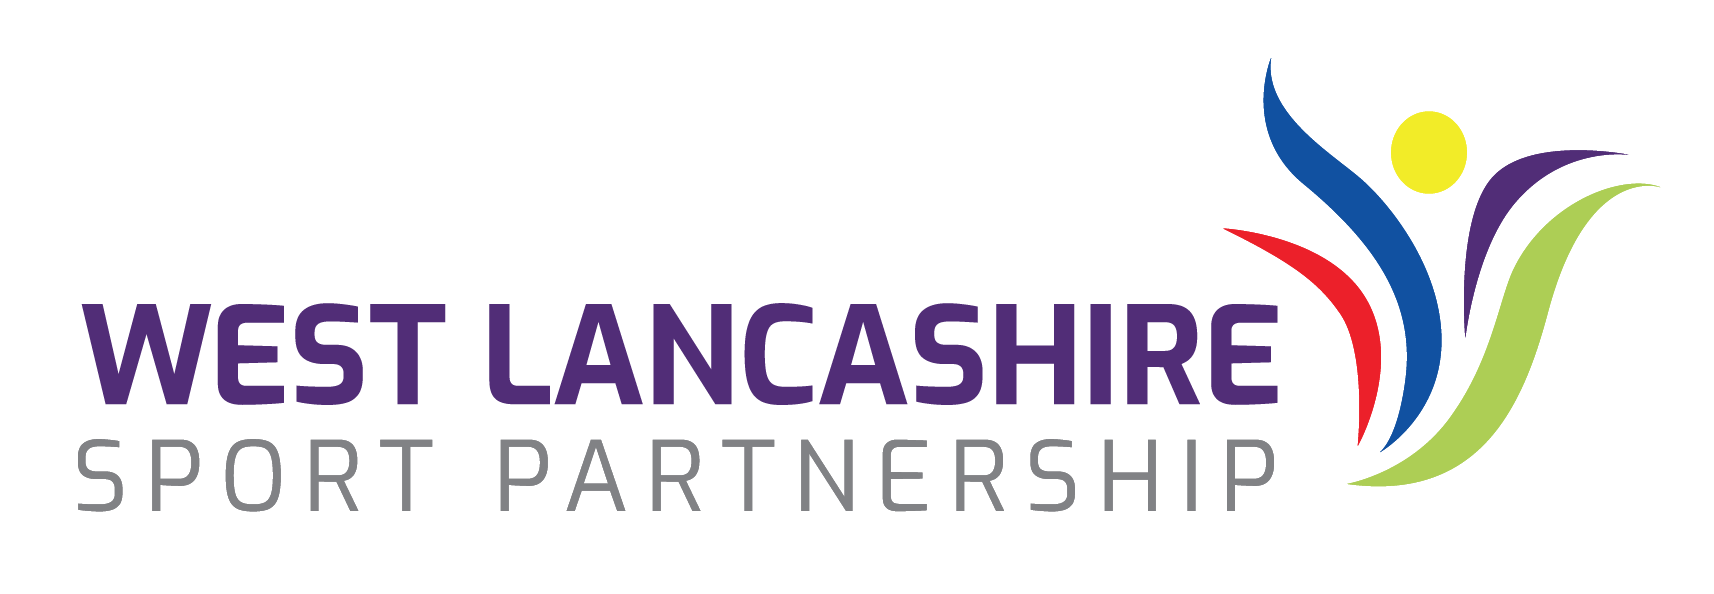 West Lancashire Sport Partnership